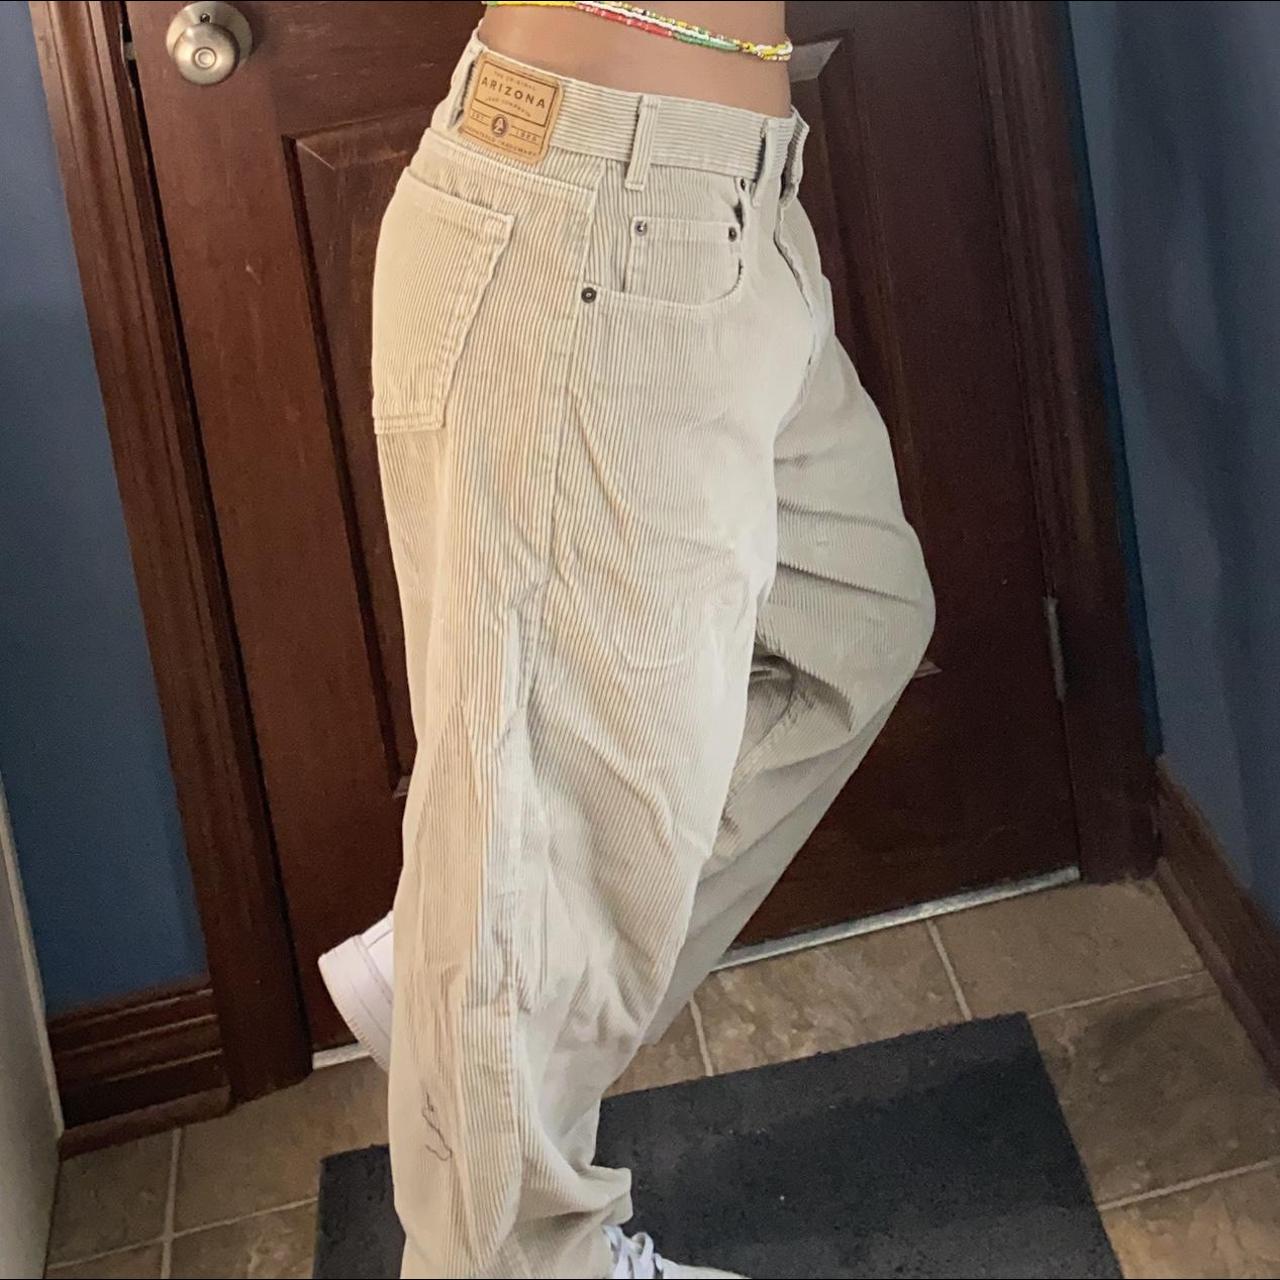 Product Image 2 - Tan corduroy pants 🤍
The perfect